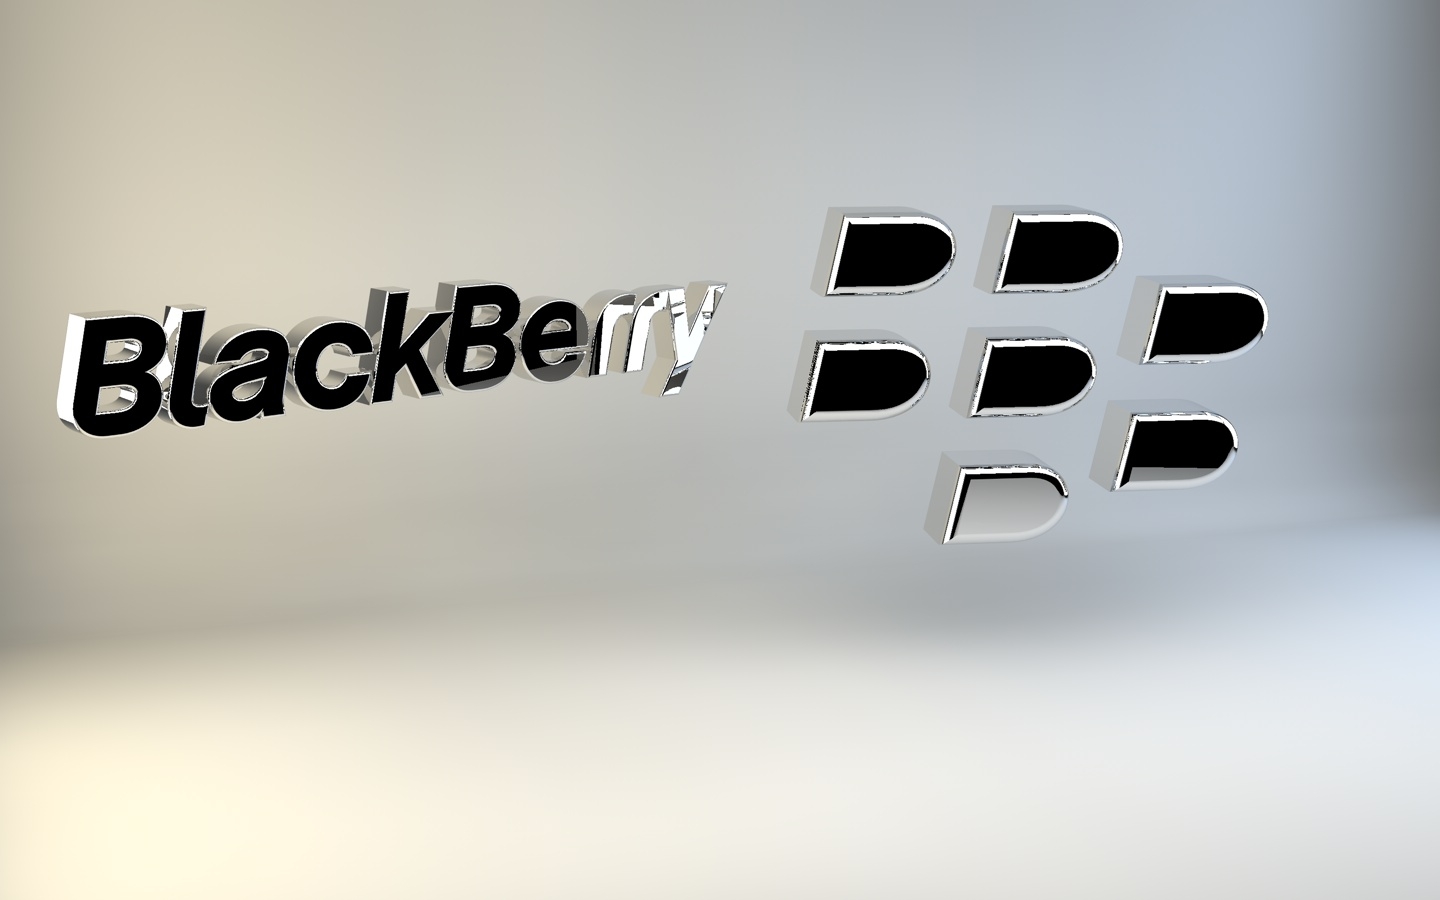 Blackberry Hd Wallpapers | Free HD Desktop Wallpapers - Widescreen ...